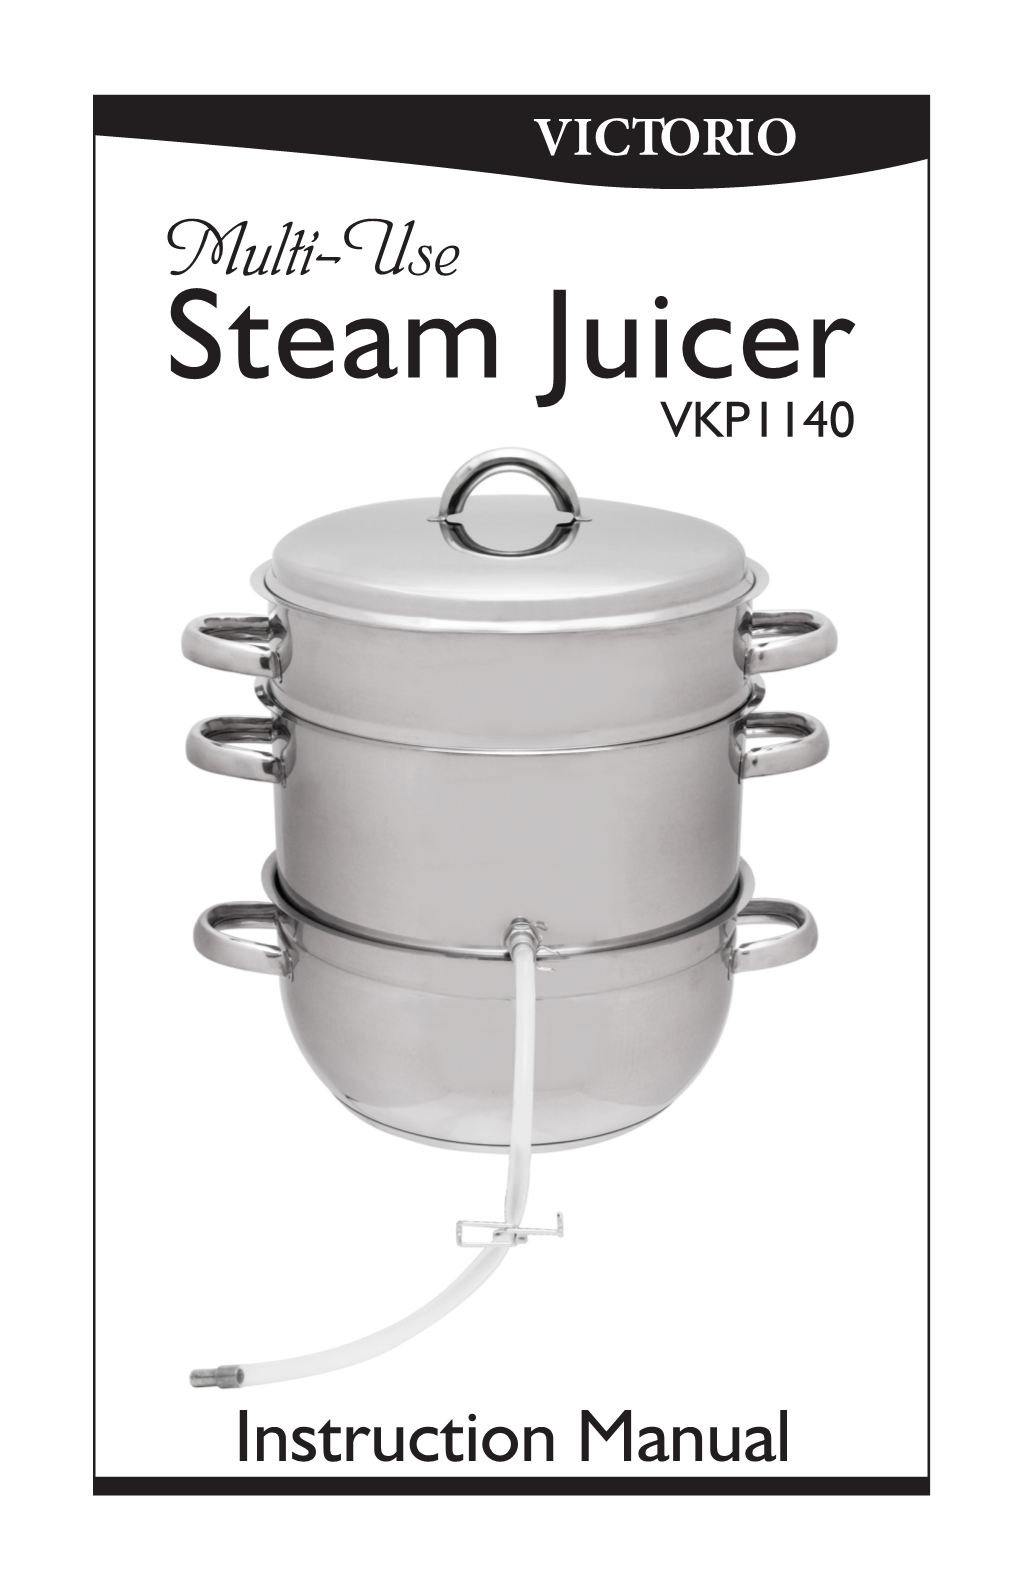 Multi-Use Steam Juicer VKP1140